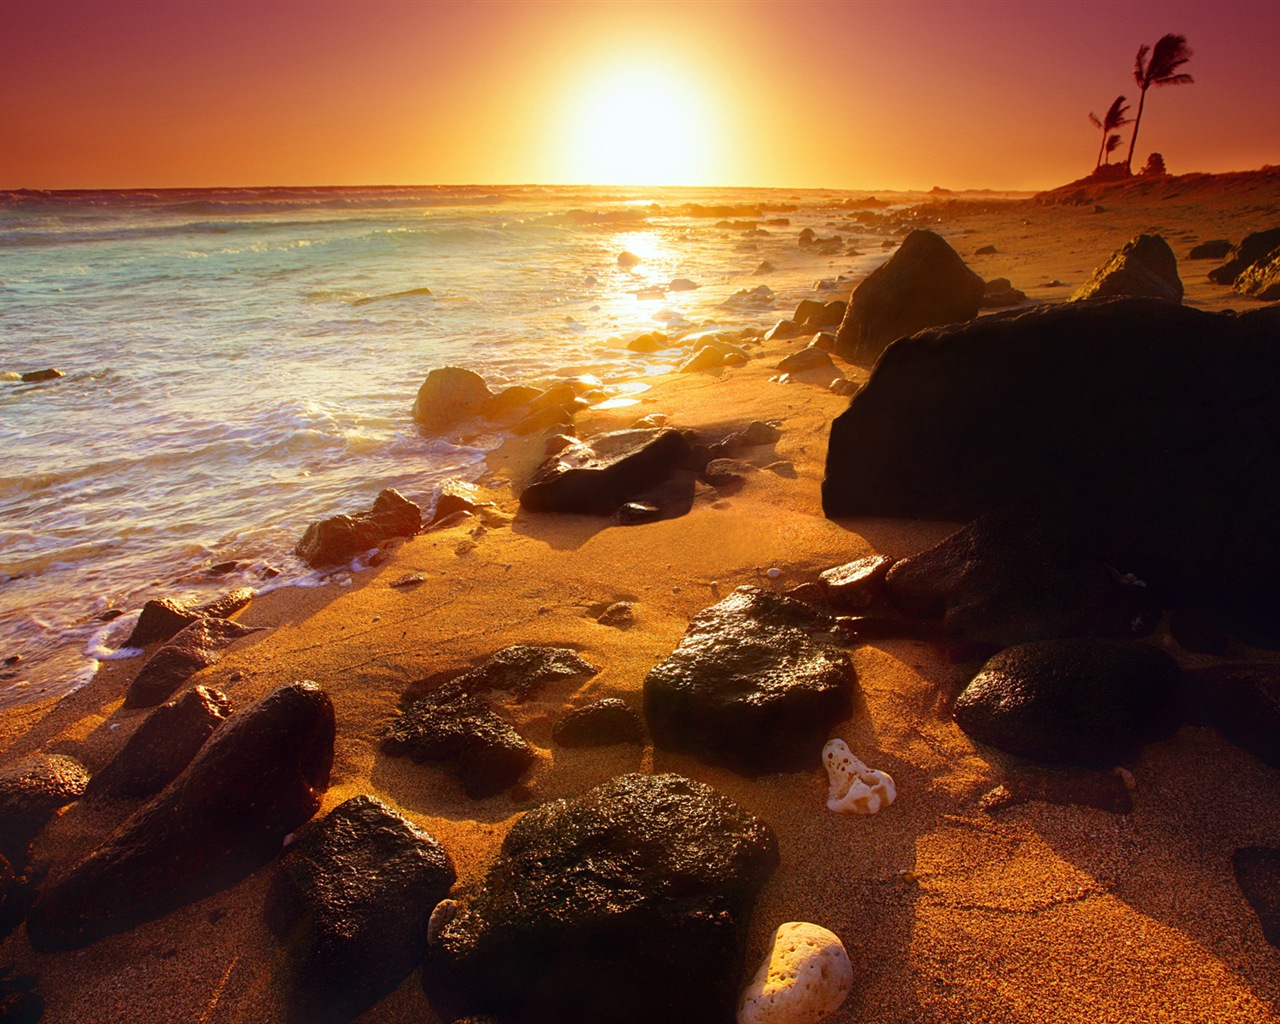 Windows 8 theme wallpaper: Beach sunrise and sunset views #1 - 1280x1024